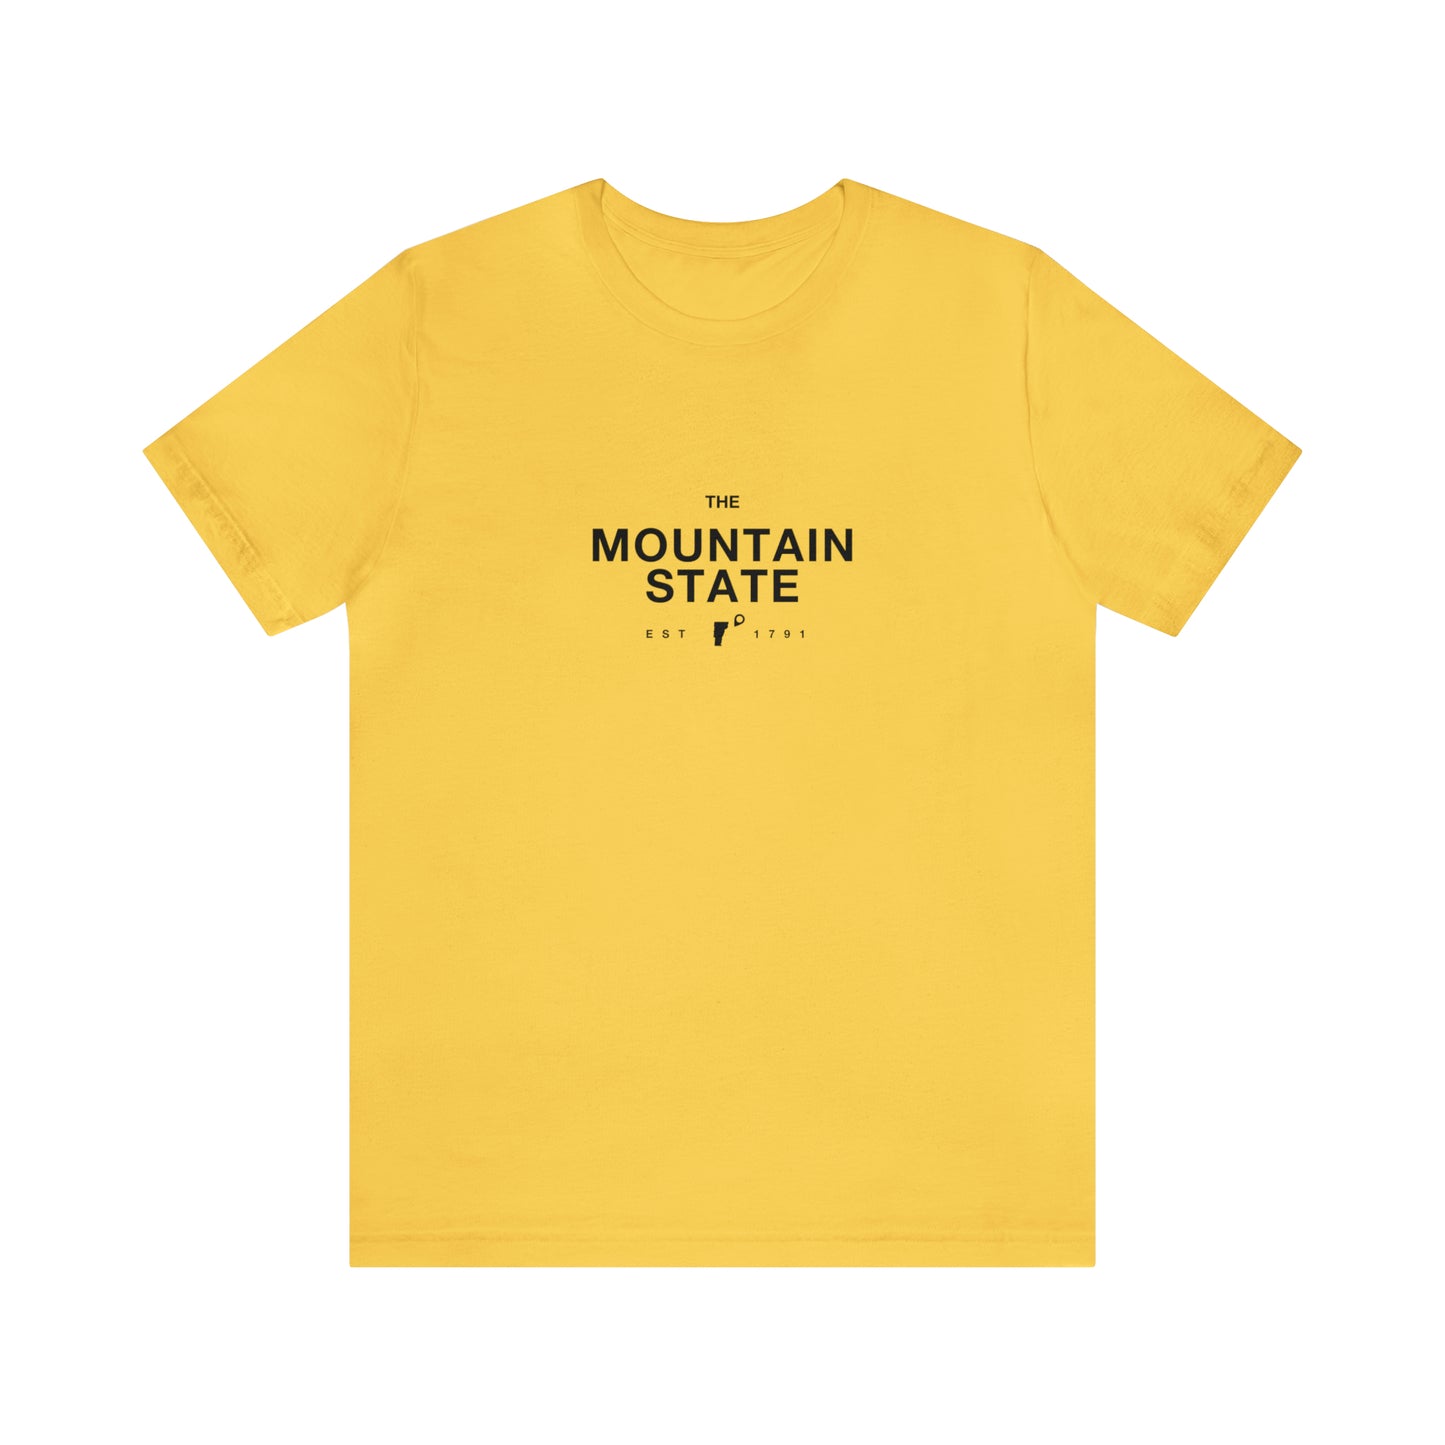 Vermont Nickname Shirt